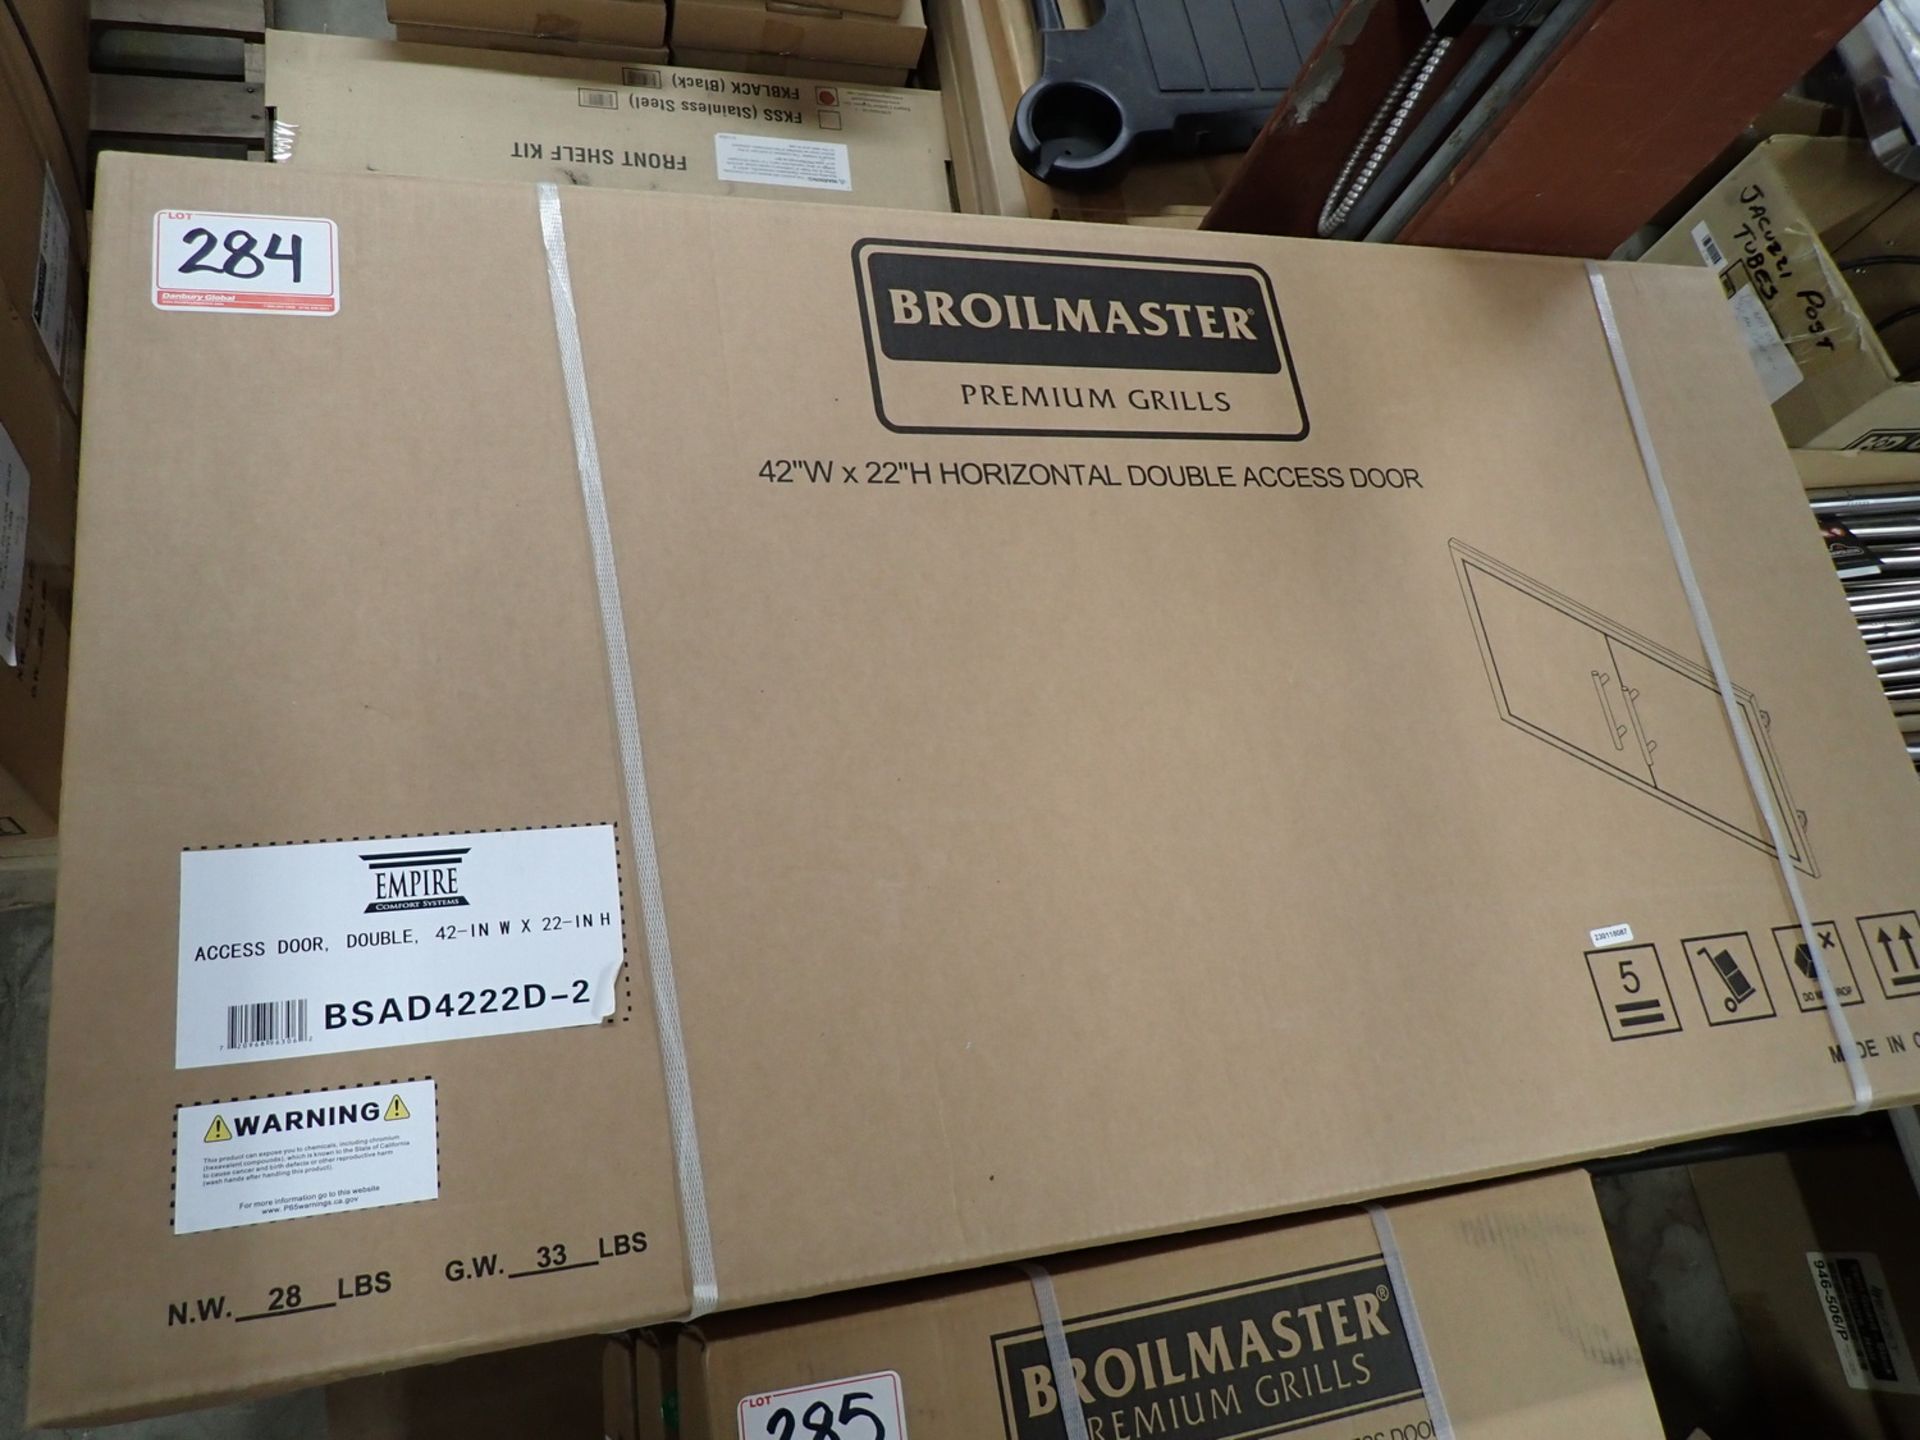 UNITS - BROILMASTER 42" W X 22" H HORIZONTAL DOUBLE ACCESS DOOR (RETAIL $659.99 EA)